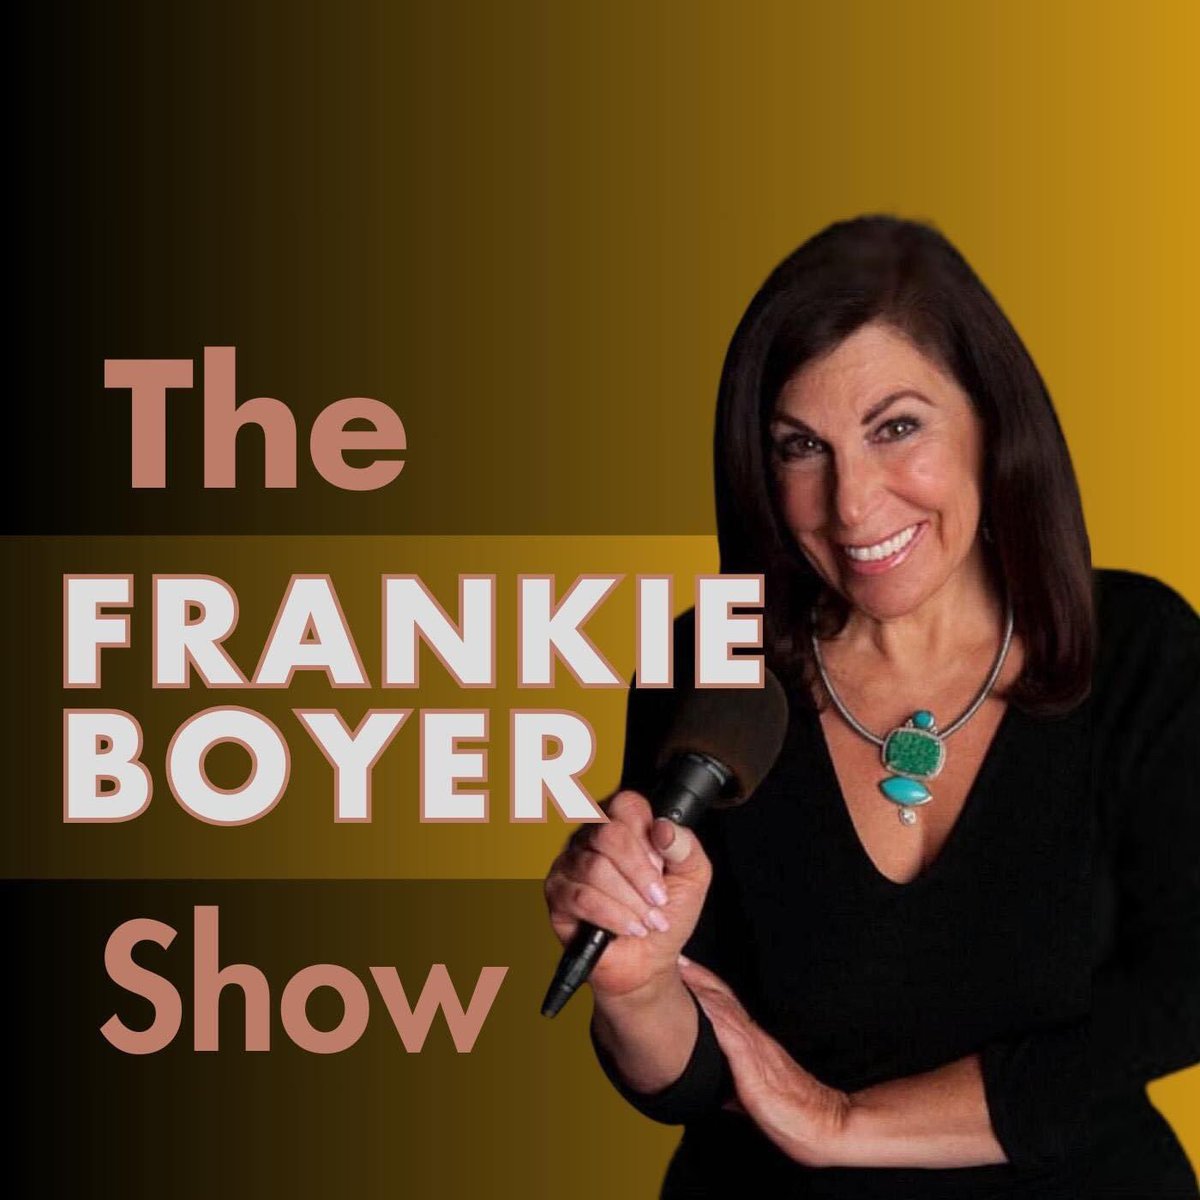 🎙️ 𝙉𝙚𝙬 𝙀𝙥𝙞𝙨𝙤𝙙𝙚 
“Unleashing Creativity”
tinyurl.com/mts65r4e
On this episode of the Frankie Boyer Show, Frankie discusses unleashing creativity with Johnathan Fanning. 

#healthandwellness #thefrankieboyershow #healthylifestyle #healthyliving #mhnrnetwork